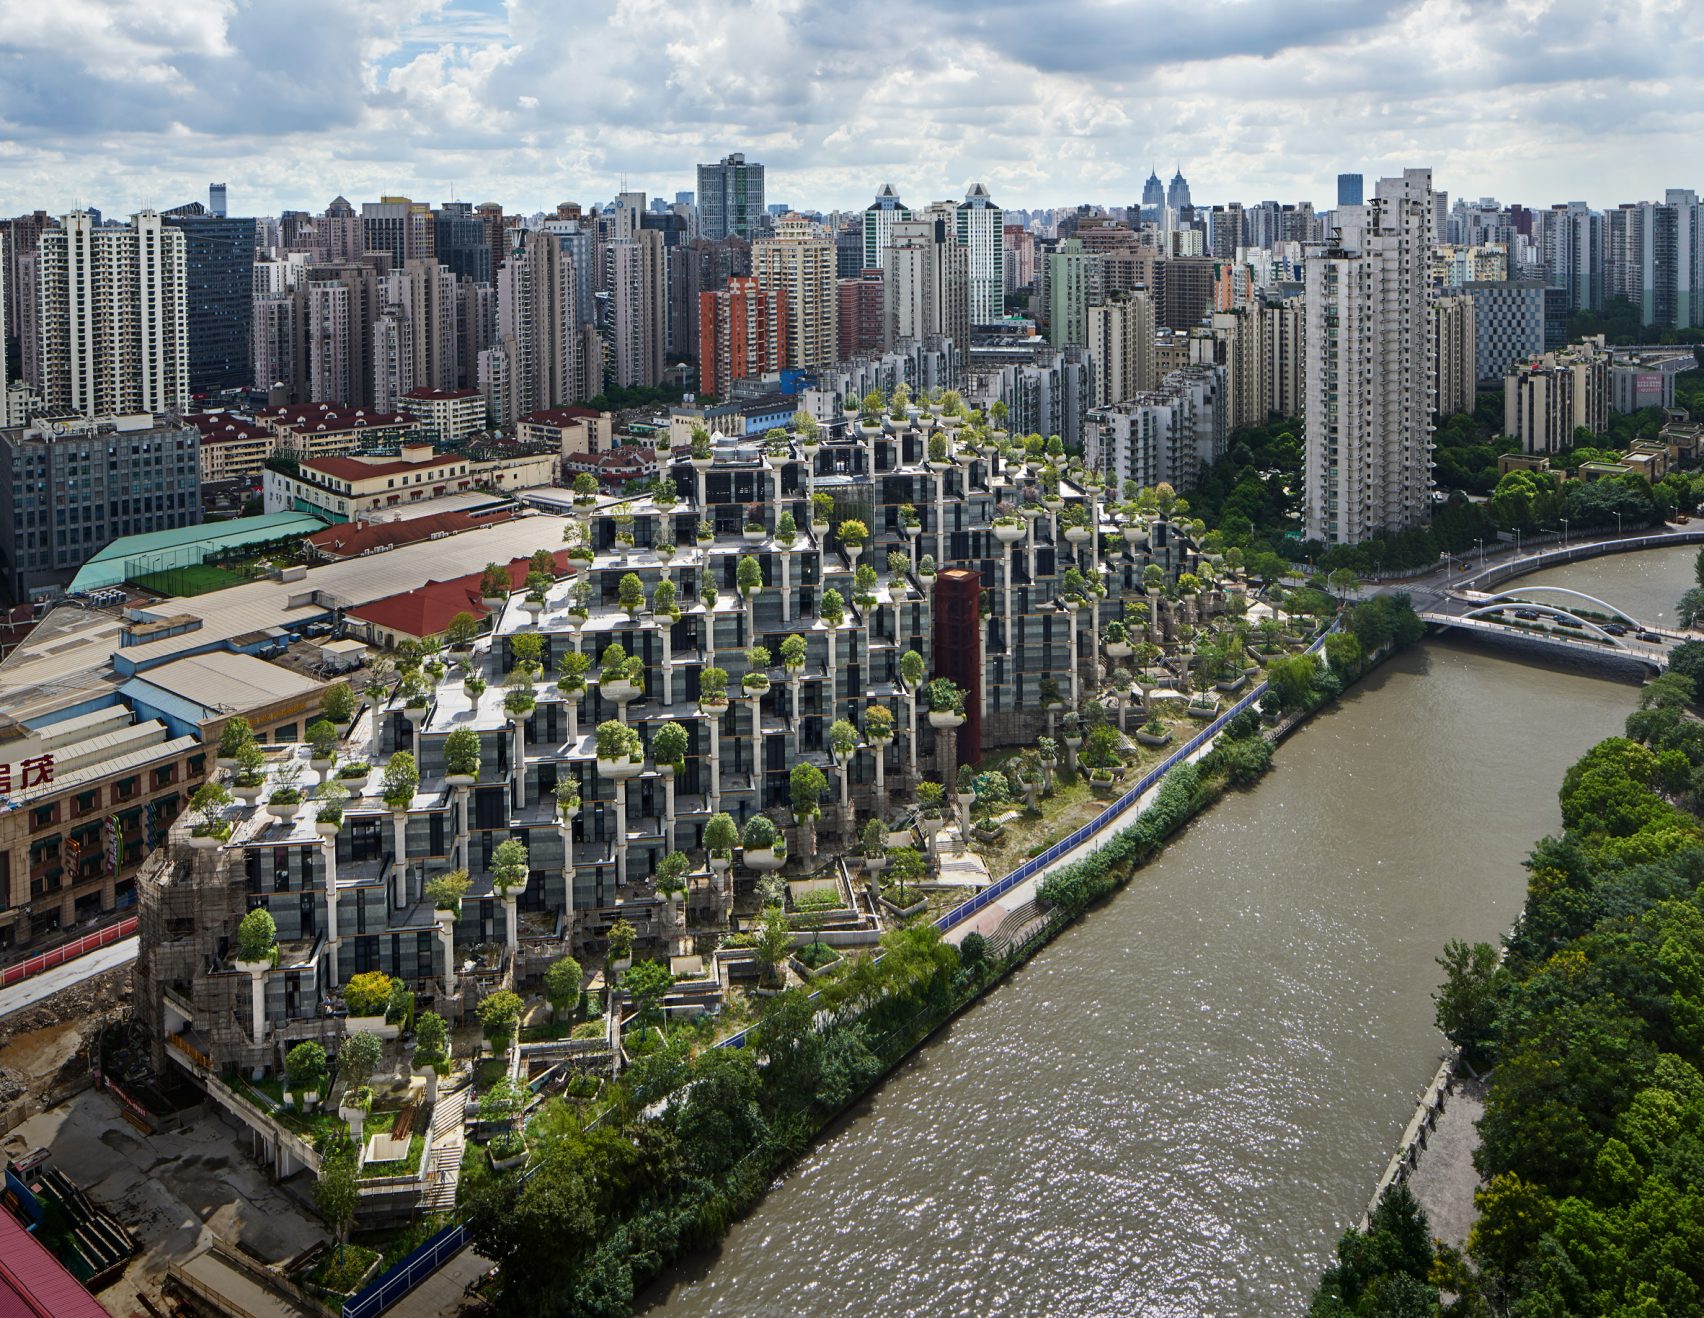 1,000 Trees Building Opens in Shanghai - Article on Thursd